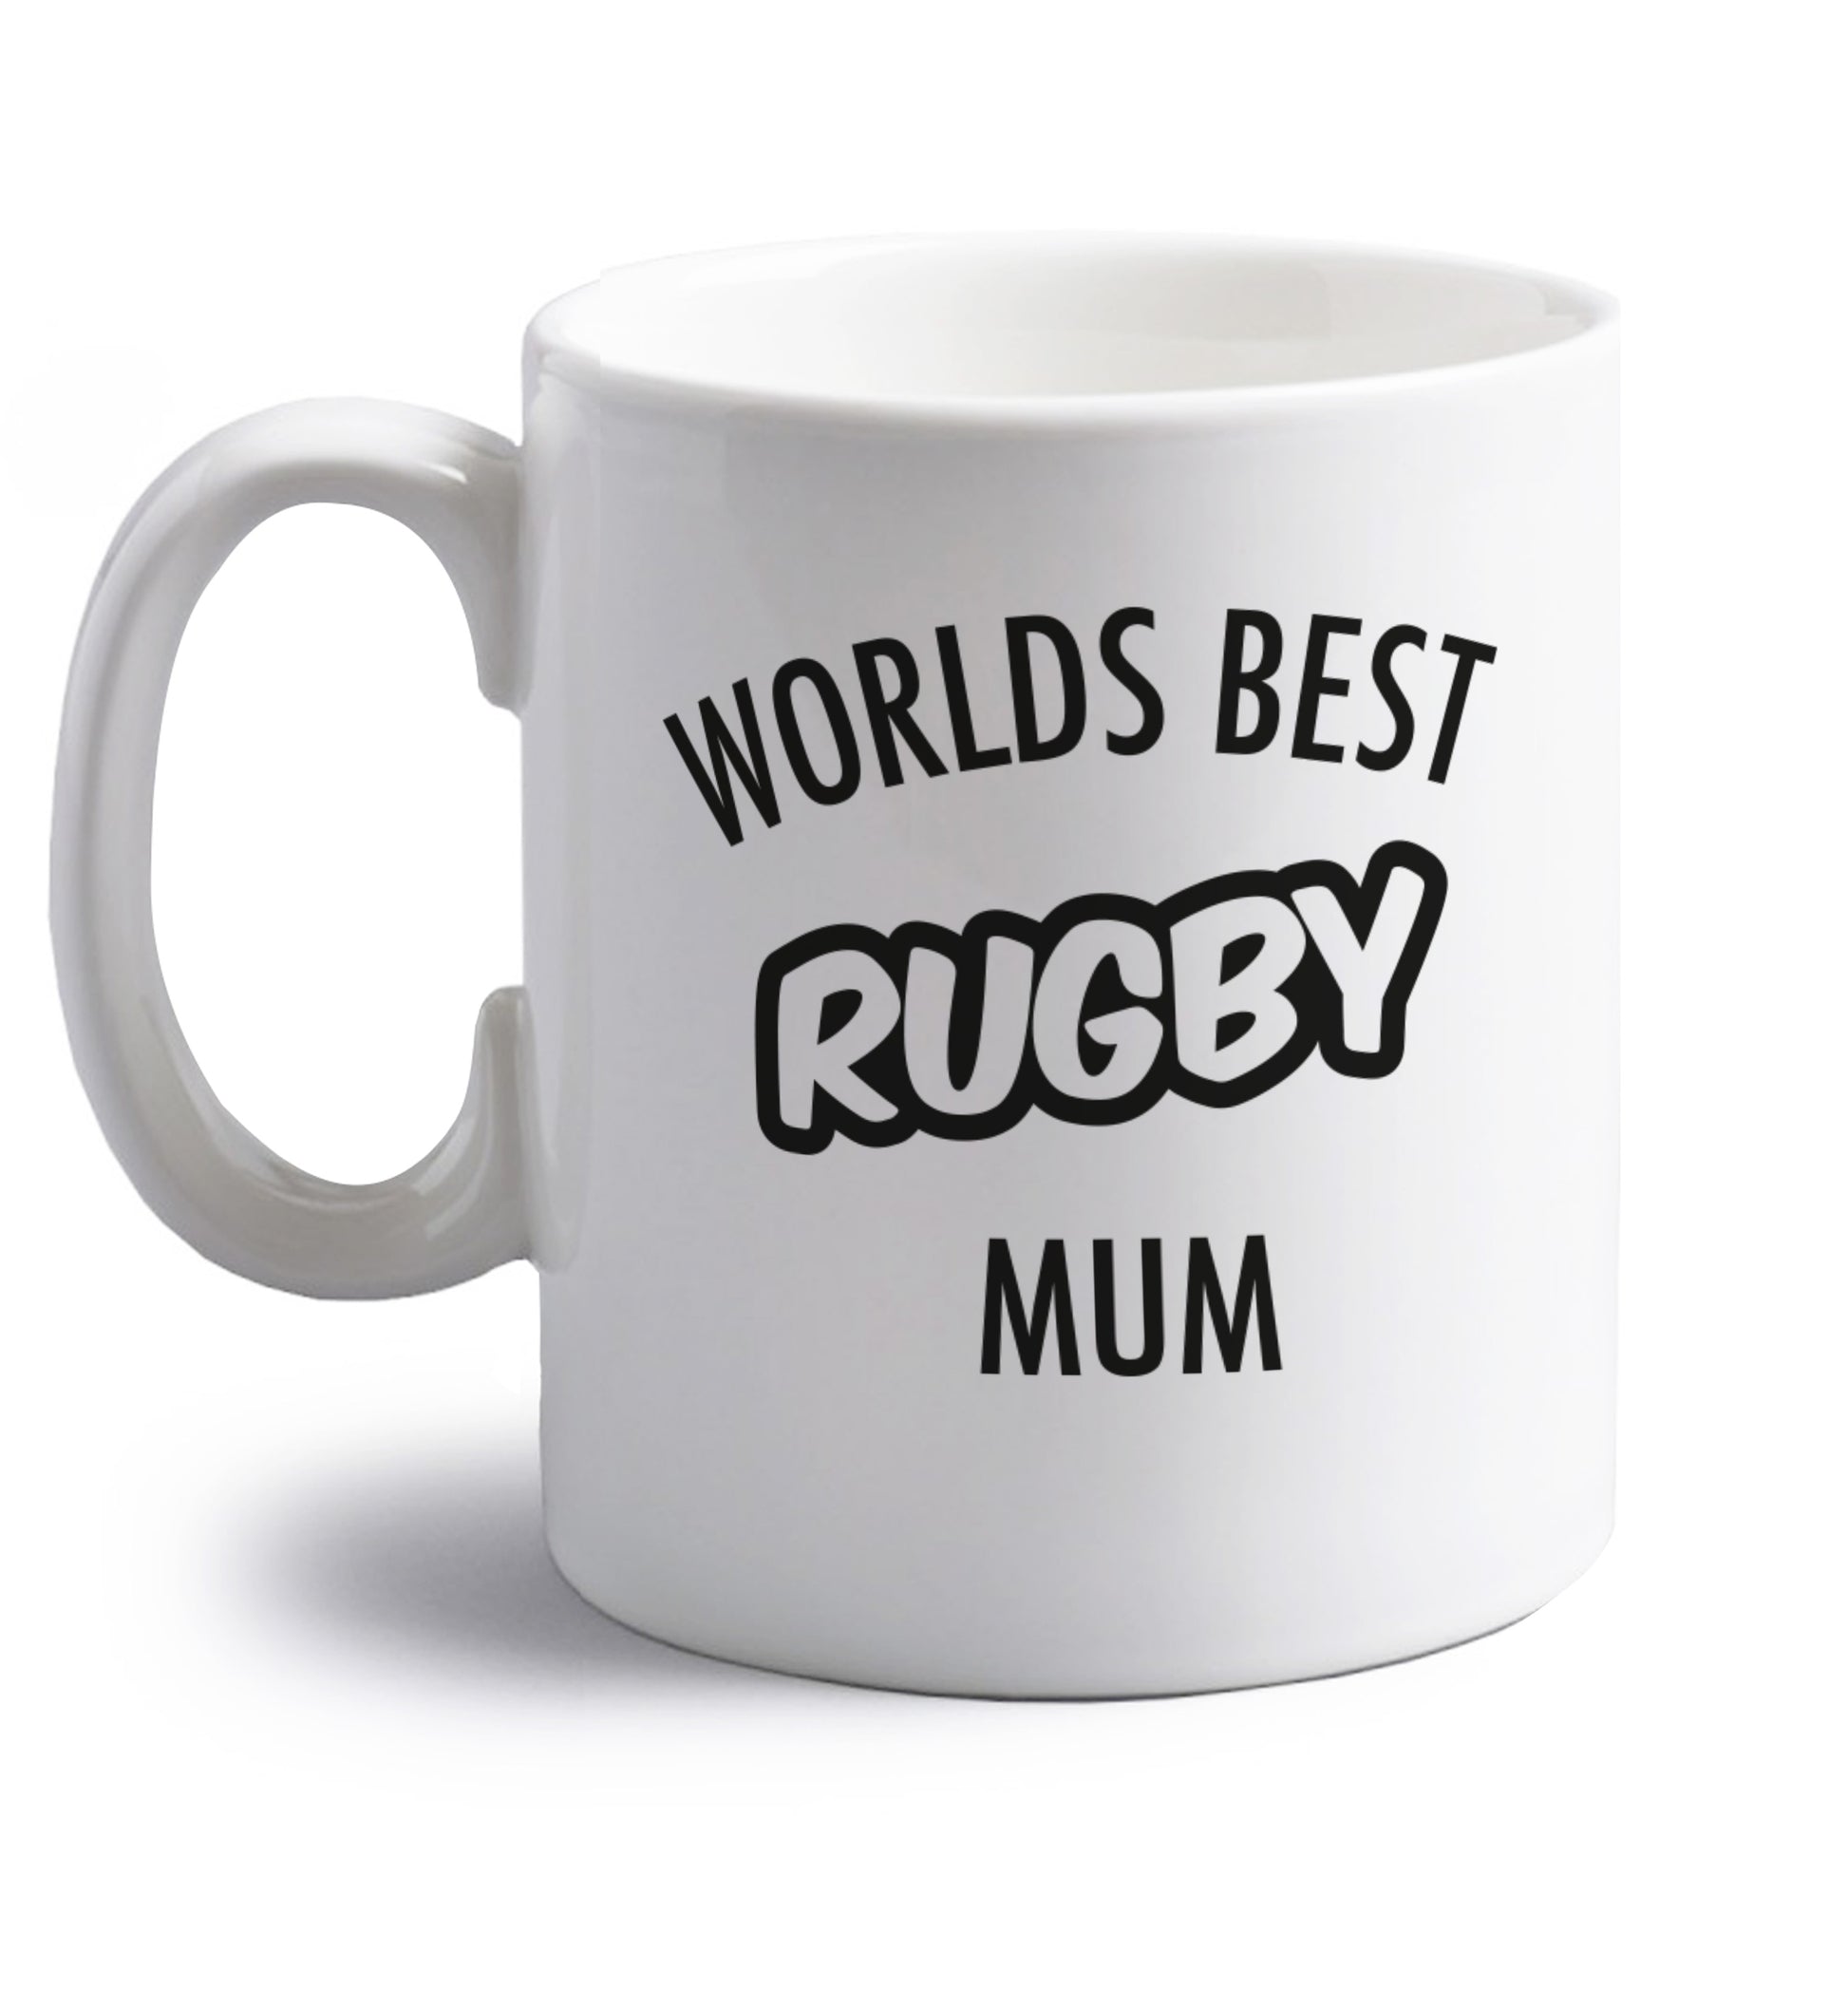 Worlds best rugby mum right handed white ceramic mug 